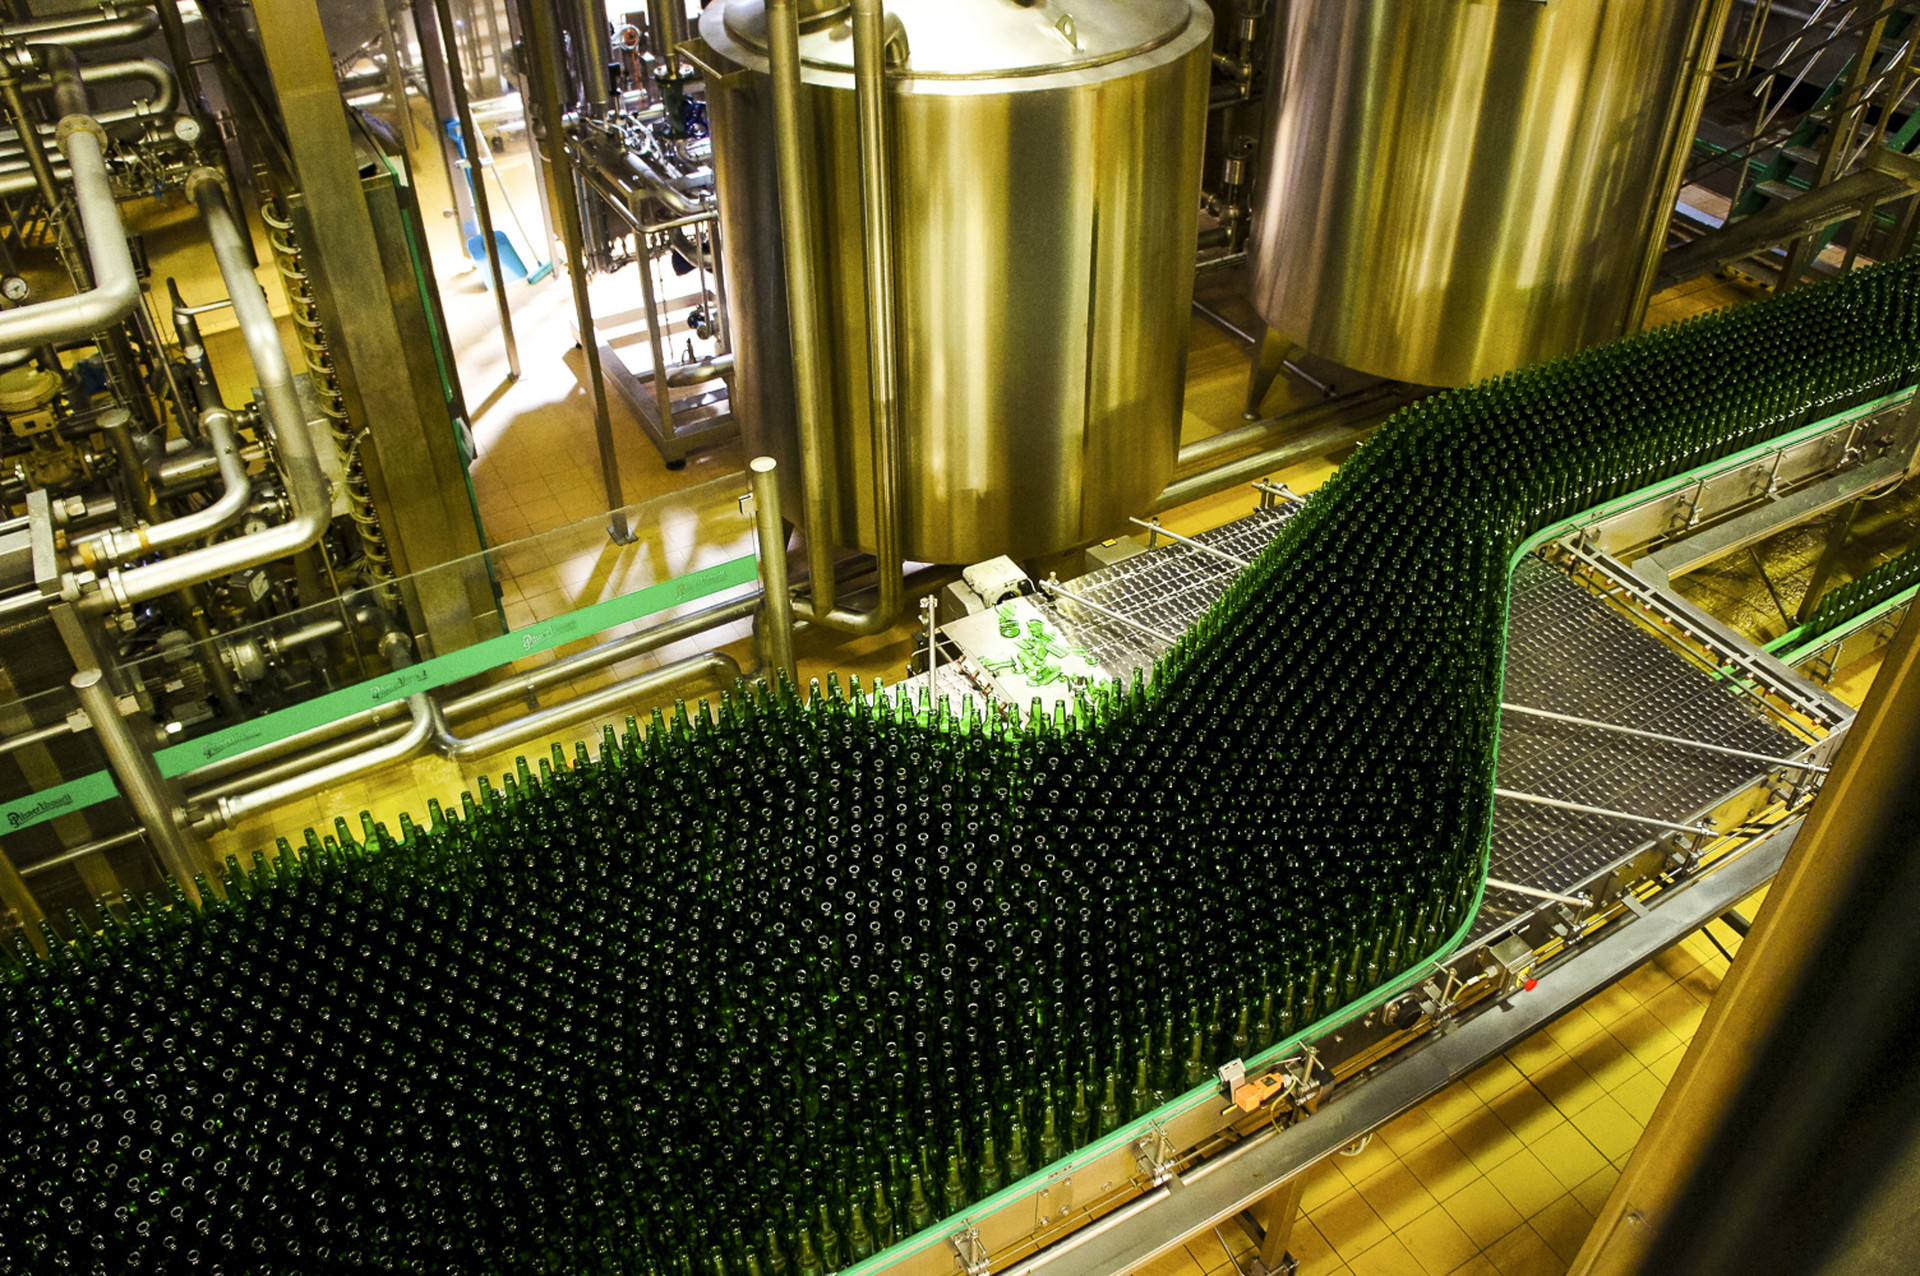 German Research Center Uses UV LED Disinfect System for Beer Bottling